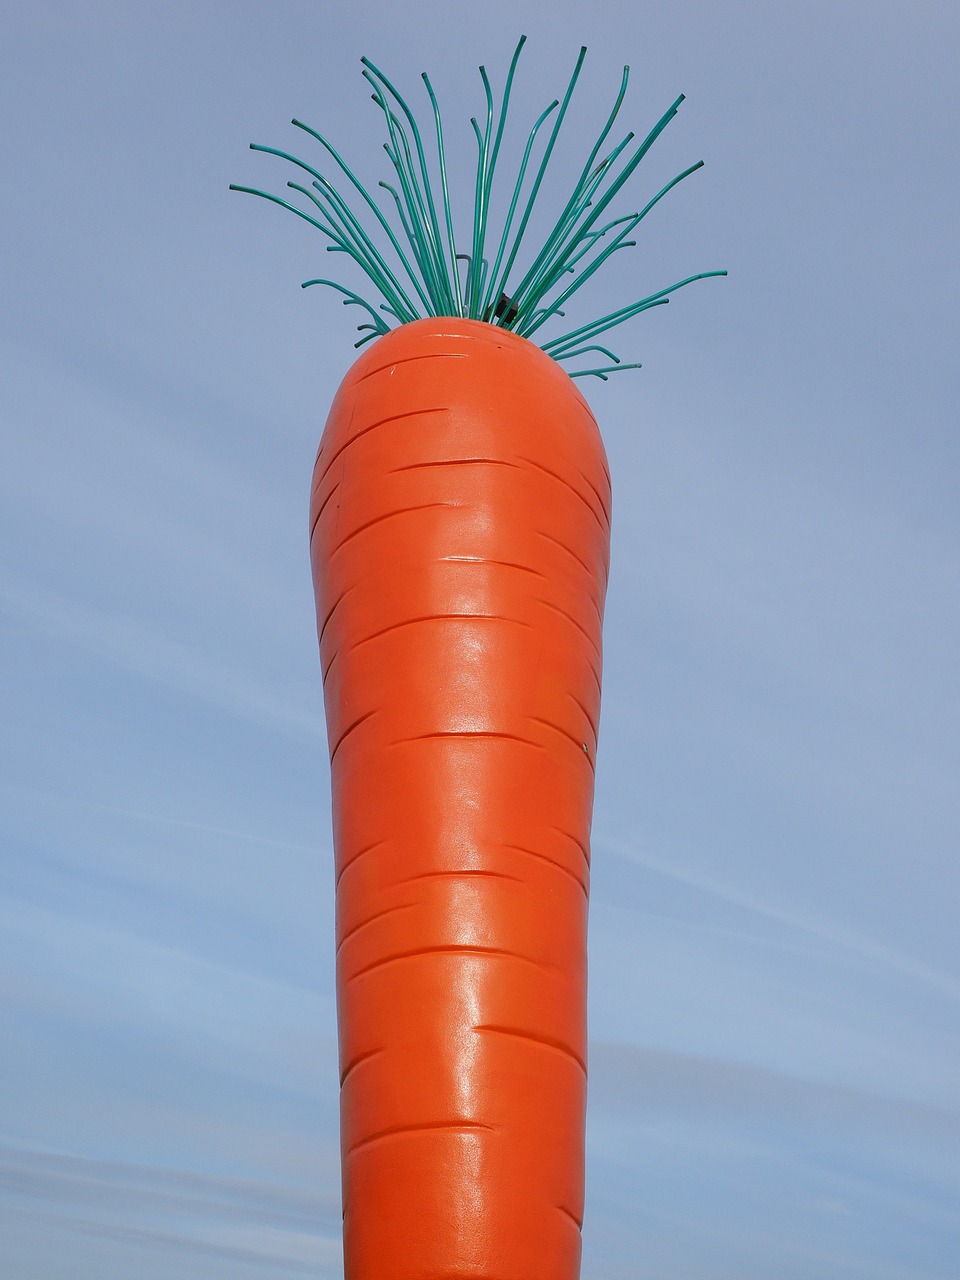 carrot red le roi carotte free photo